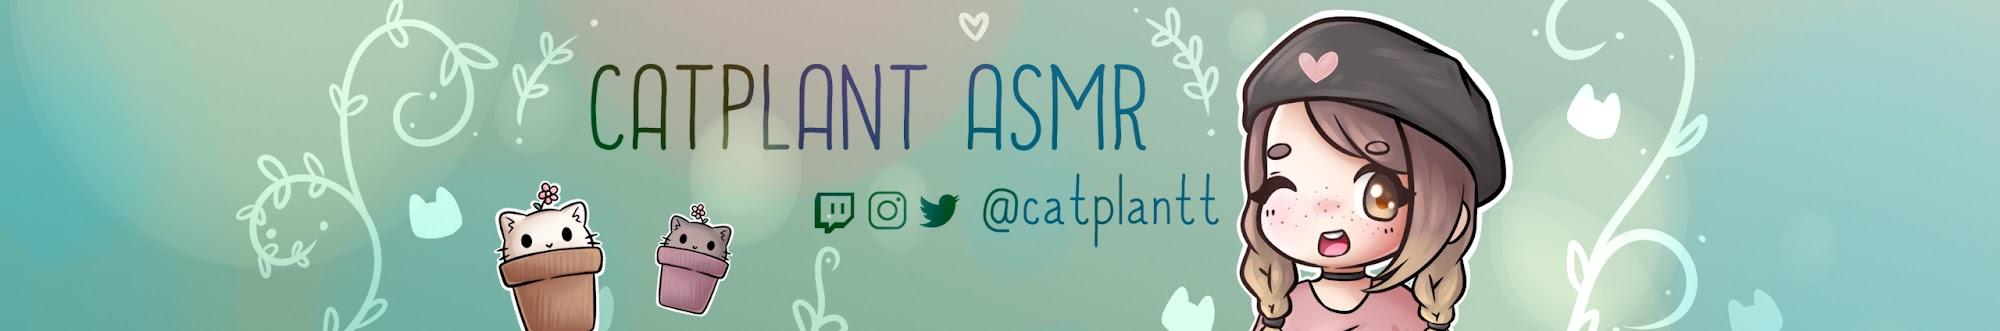 Catplant ASMR